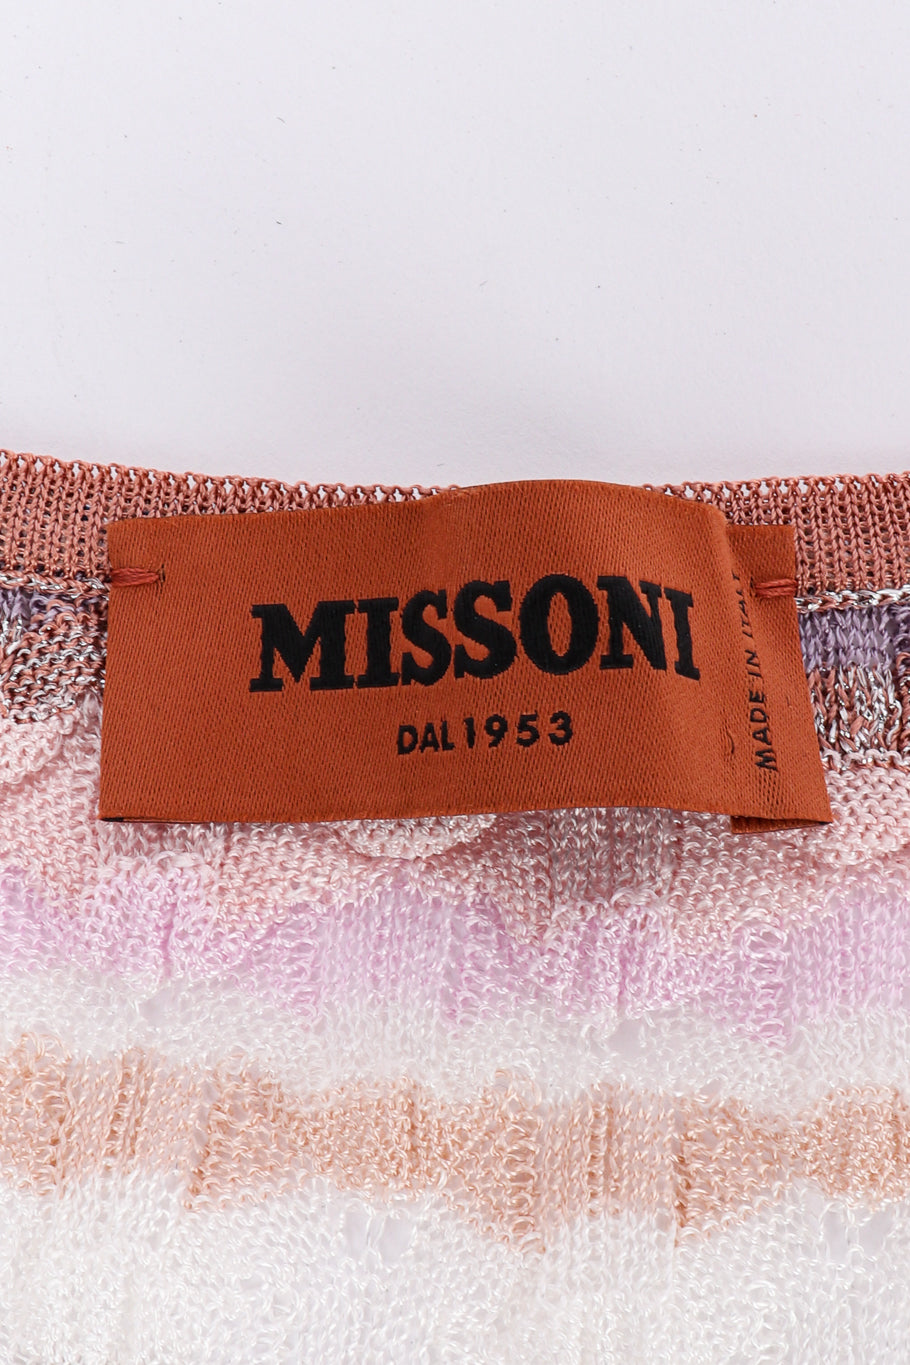 Missoni Striped Knit Duster, Tank, and Pants Set tank signature label closeup @Recessla